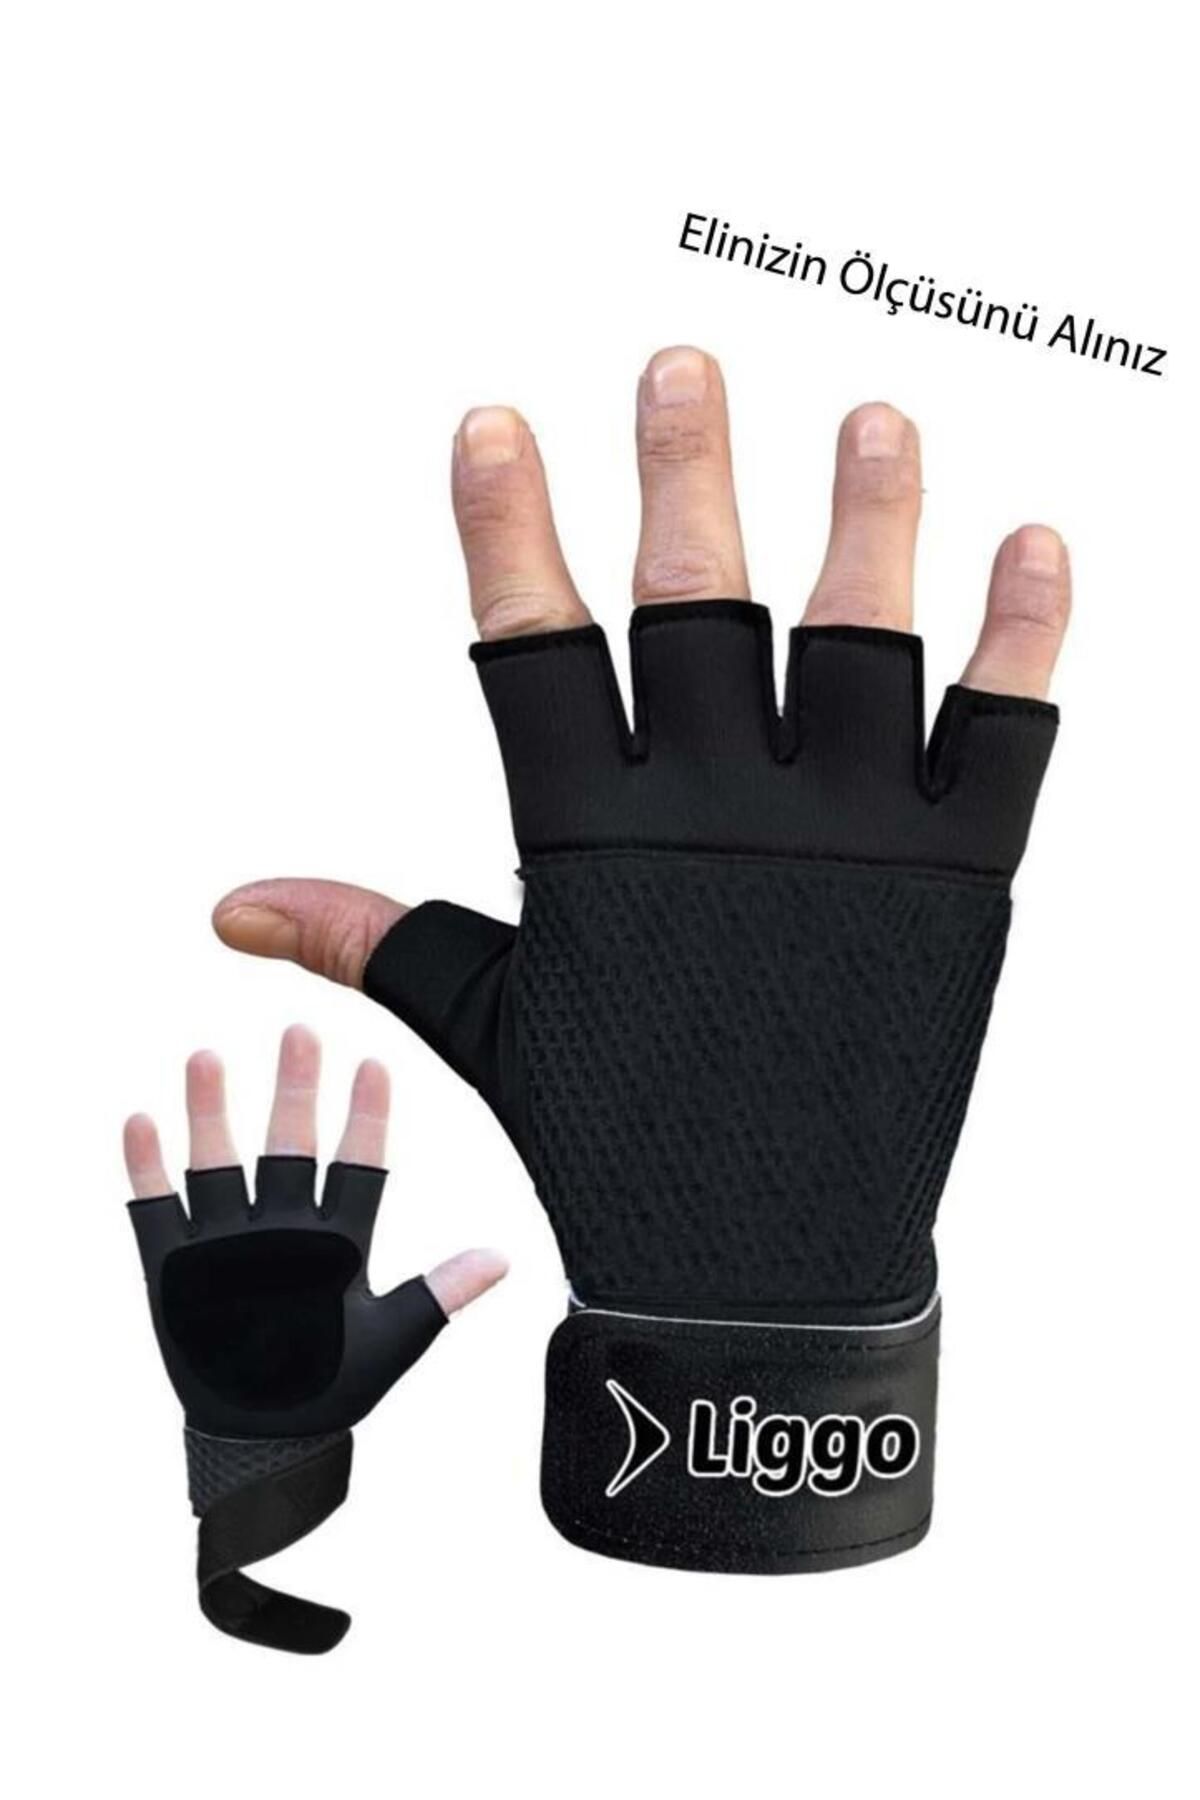 Liggo Lifting Bilek Bandajlı Ağırlık Eldiveni Fitness Eldiveni